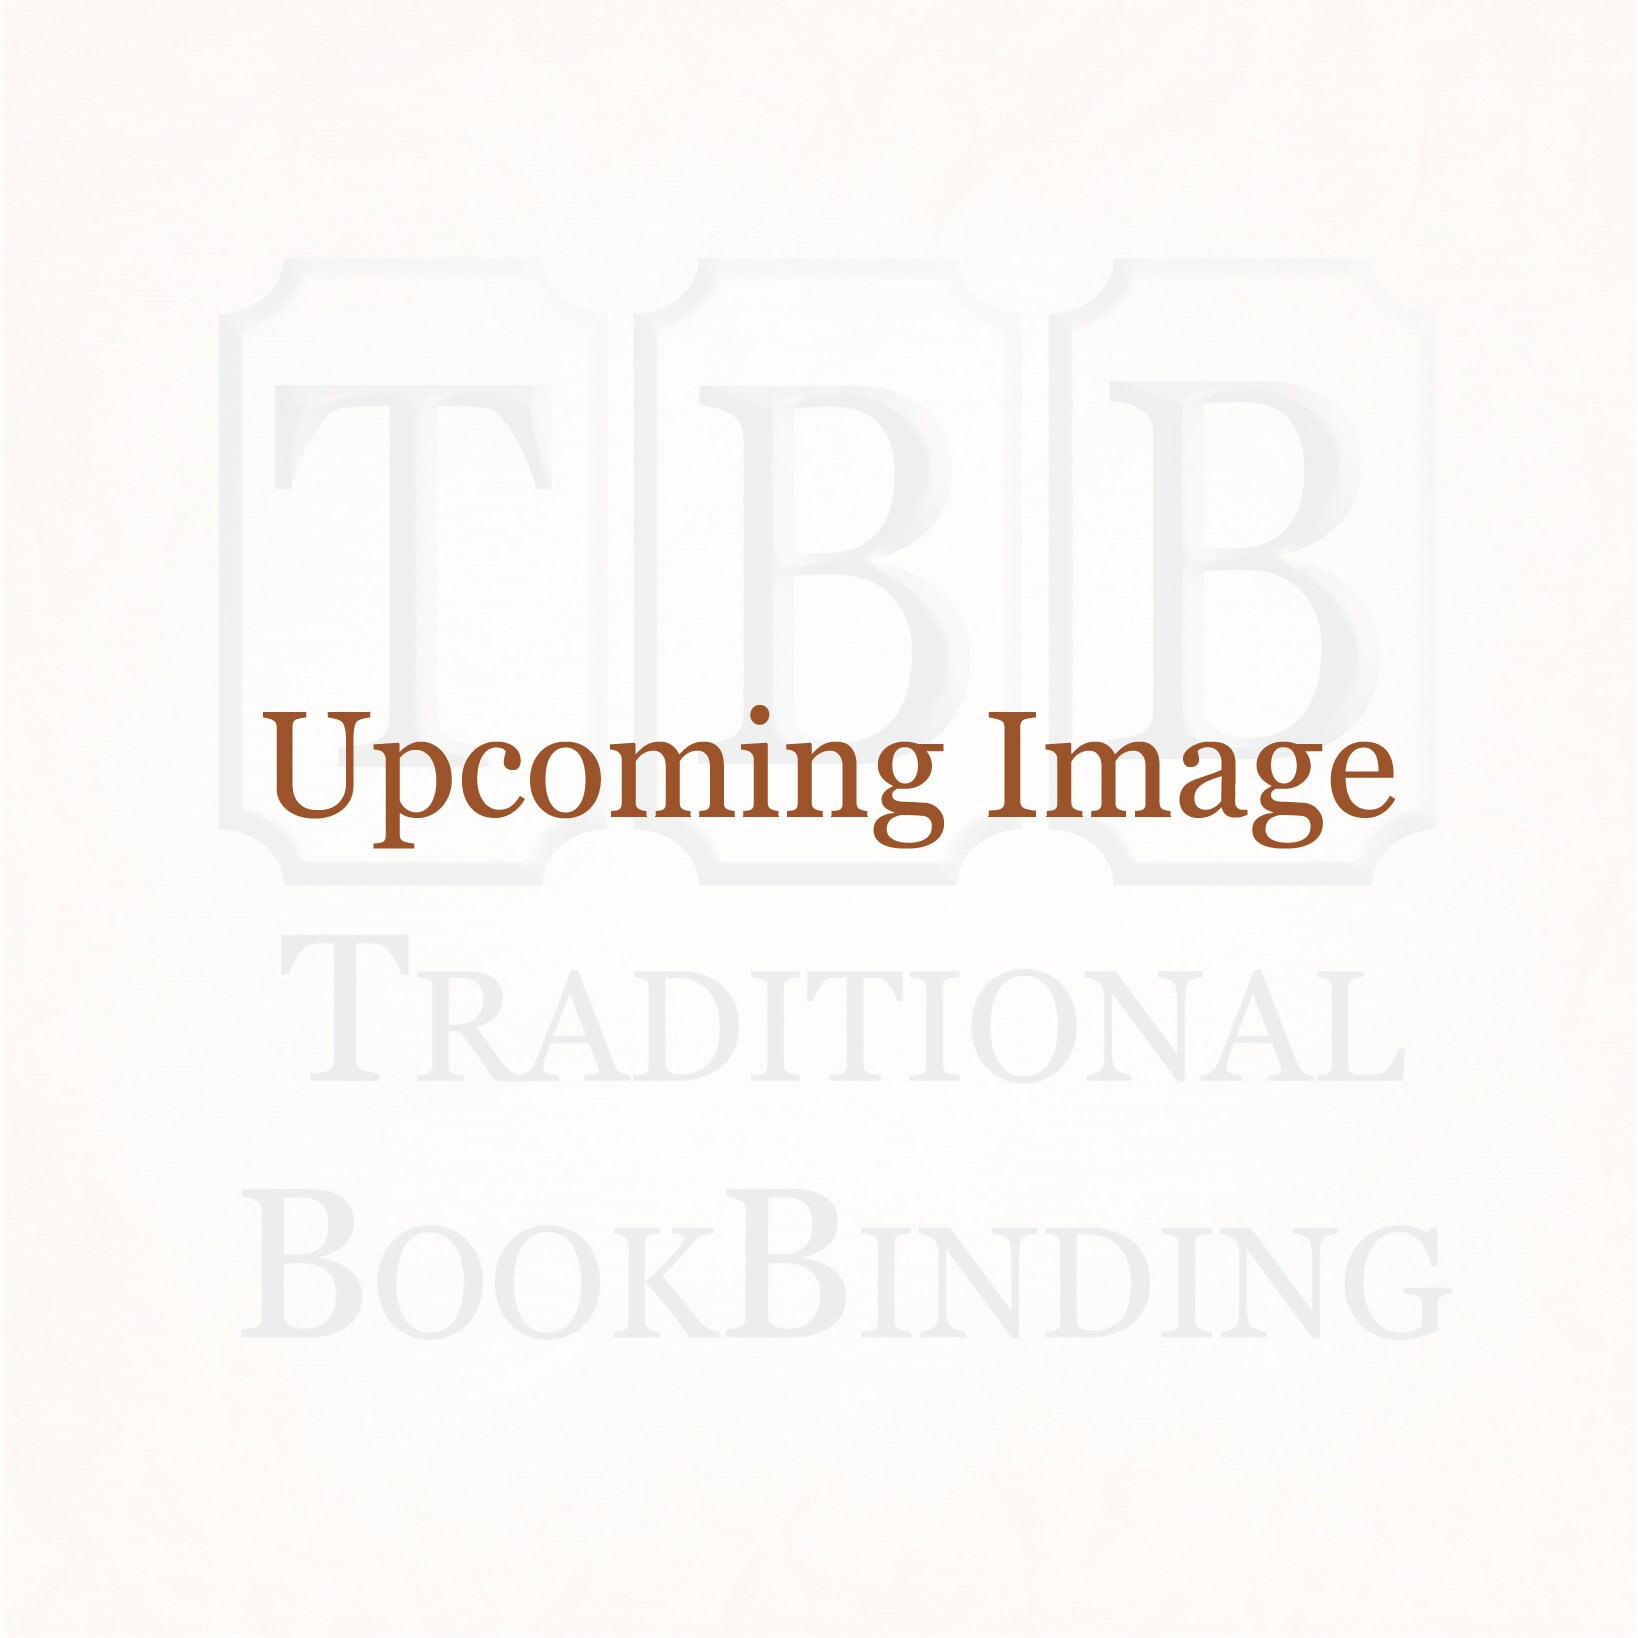 Bookbinding Sewing Thread Packs – Traditional BookBinding